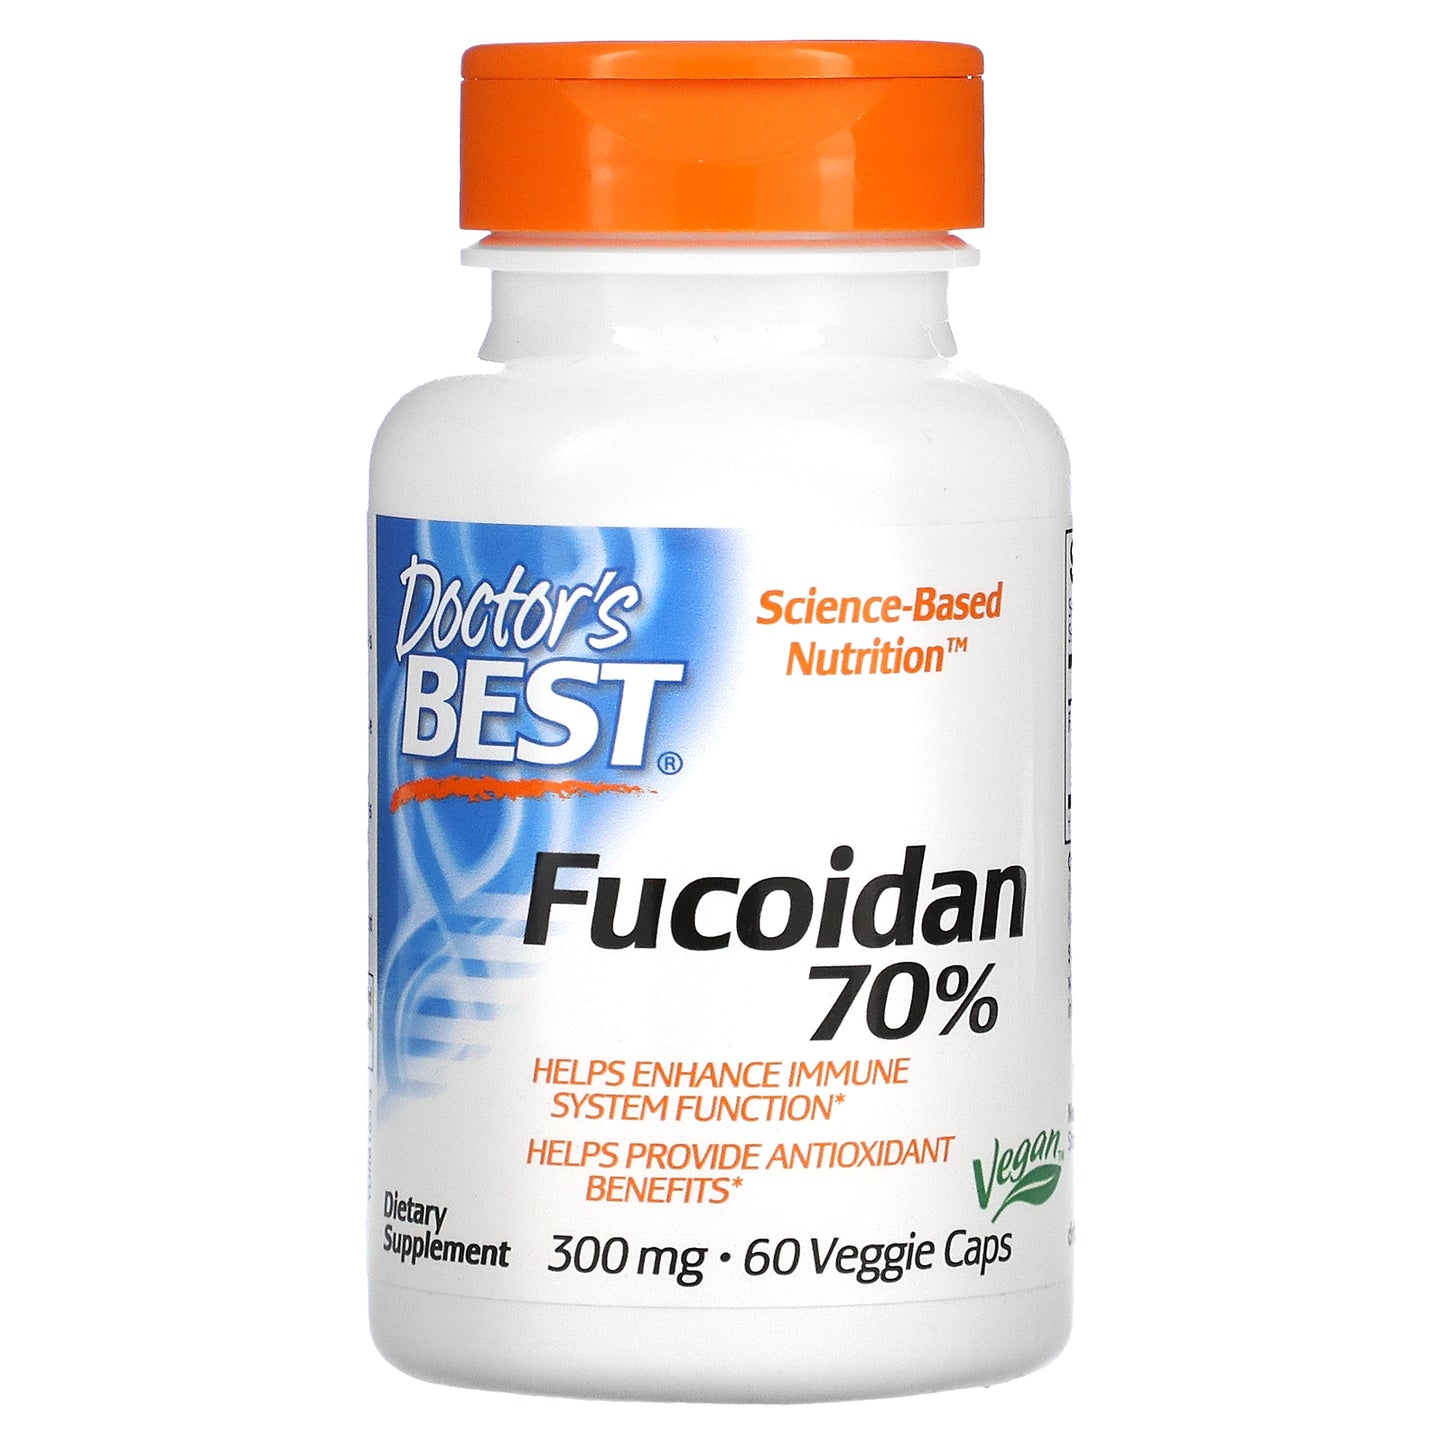 Doctor's Best Fucoidan 70%, 60 Veggie Caps